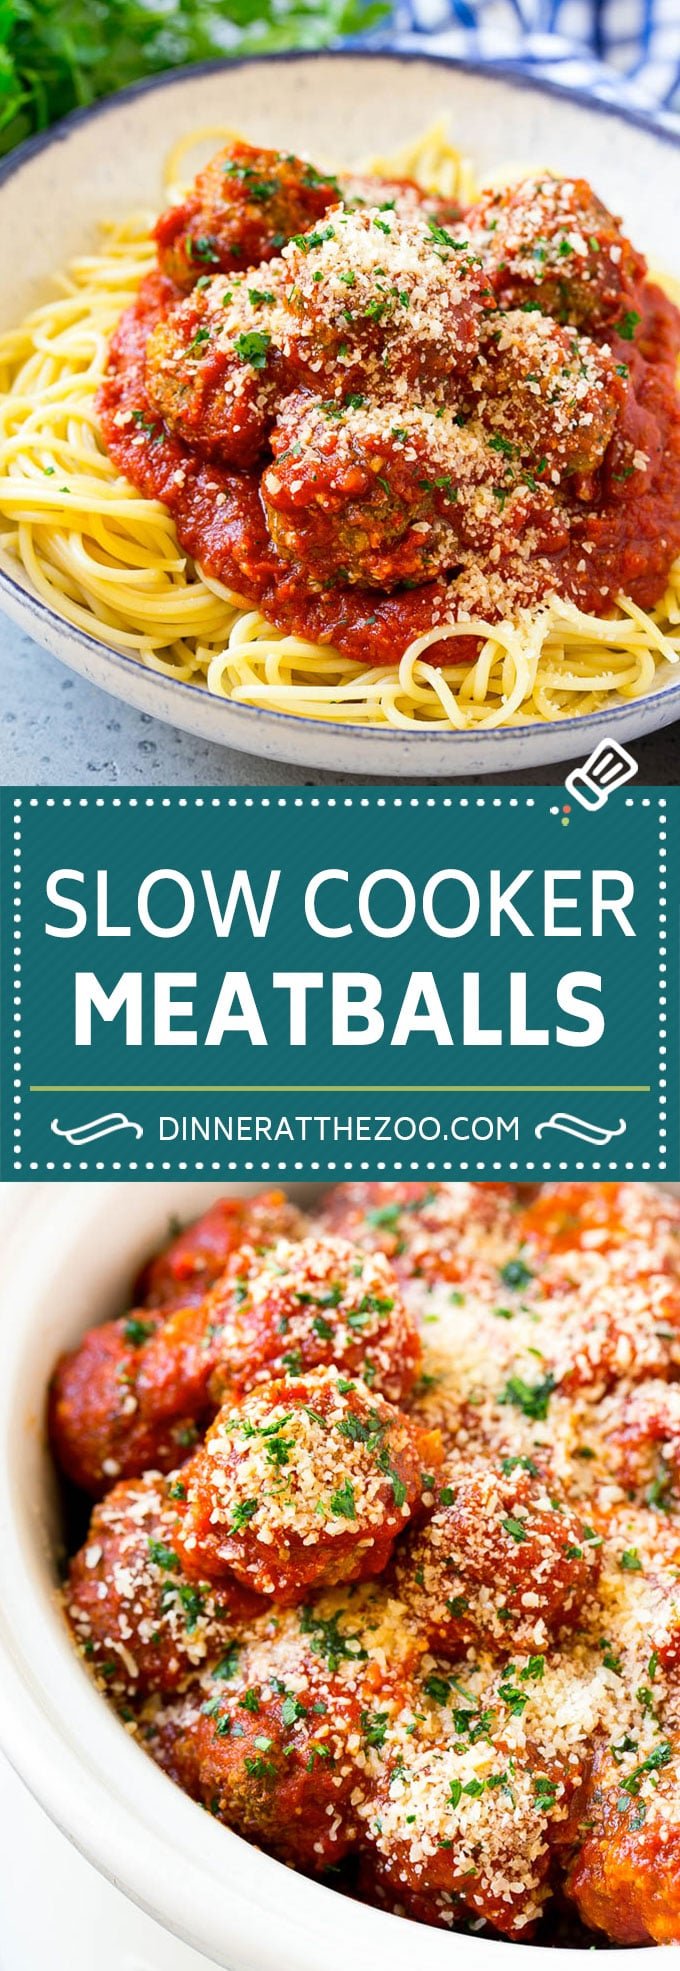 Slow Cooker Meatballs Recipe | Crock Pot Meatballs | Italian Meatballs | Spaghetti and Meatballs #meatballs #slowcooker #crockpot #dinner #dinneratthezoo #italian